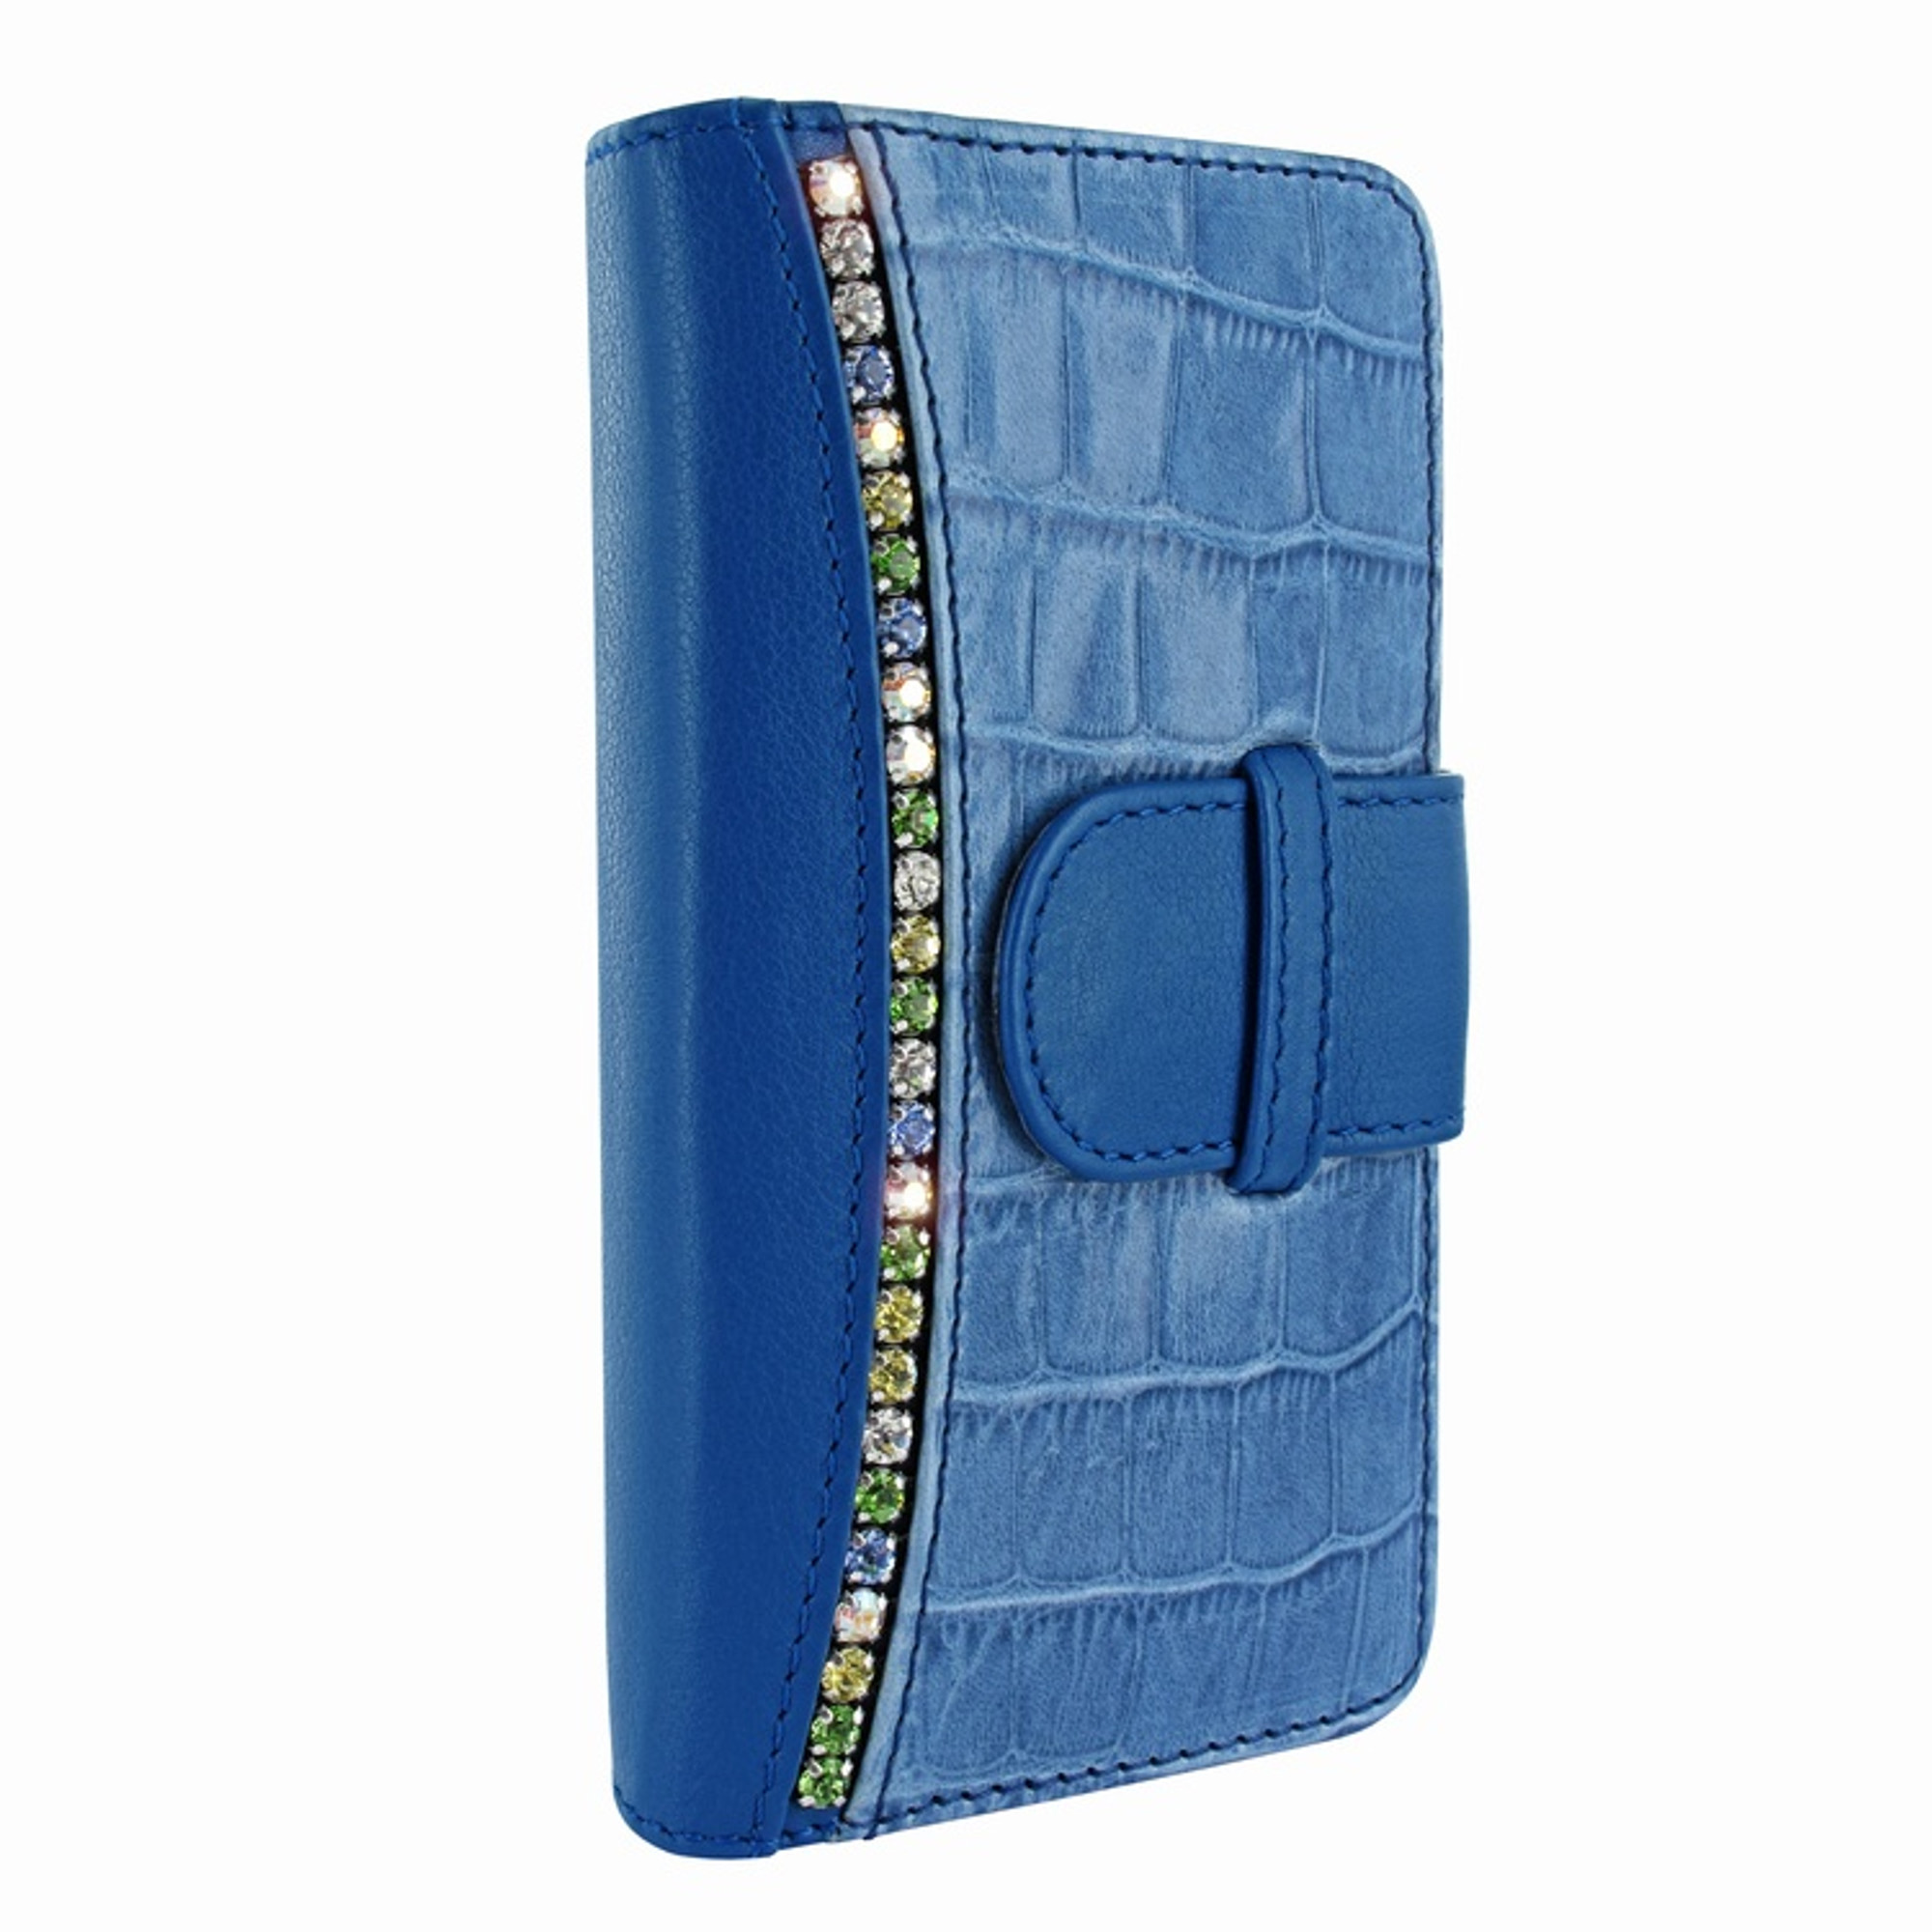 Piel Frama iPhone 7 Plus / 8 Plus Case - Blue Swarovski Cowskin-Crocodile